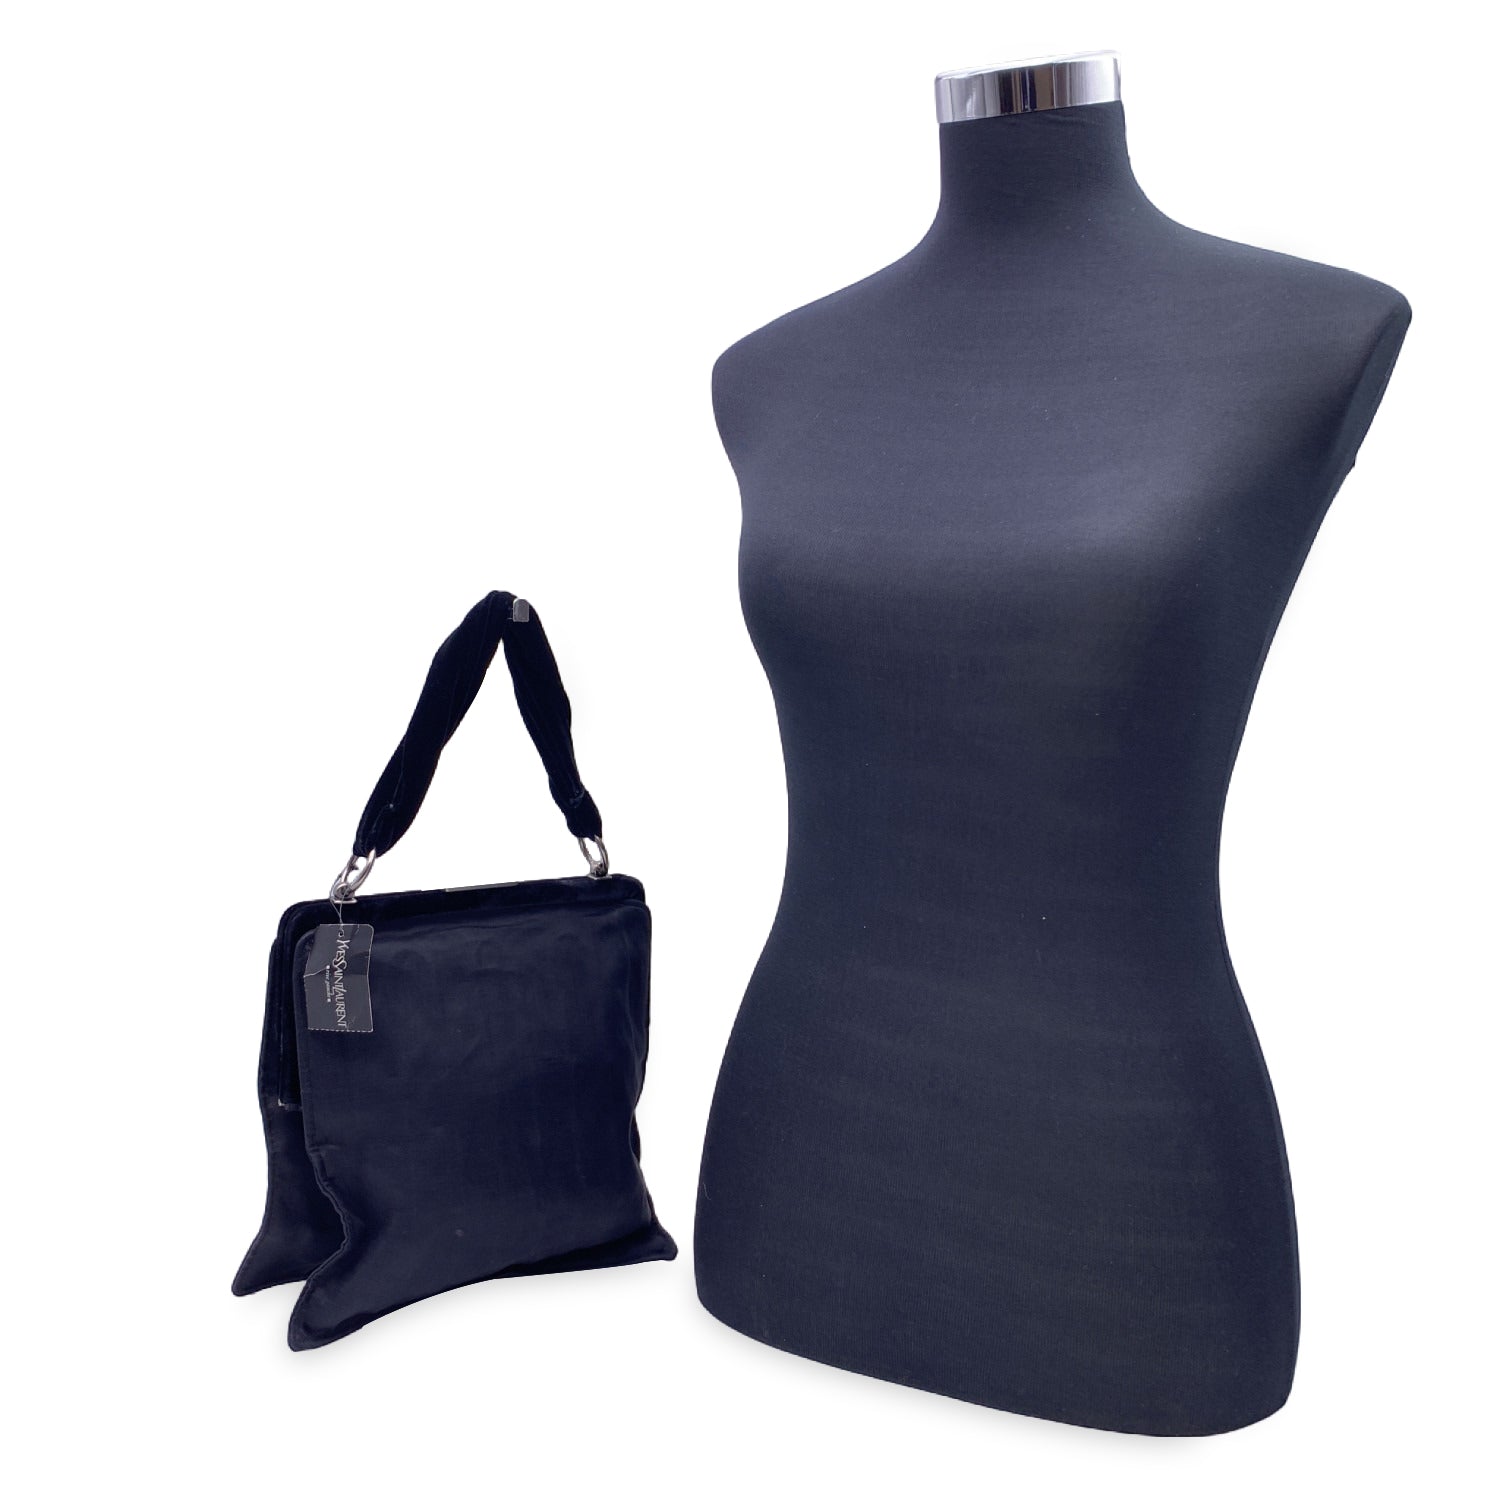 Yves Saint Laurent YSL Pink Leather Sac de Jour Handbag Purse W/Strap | eBay